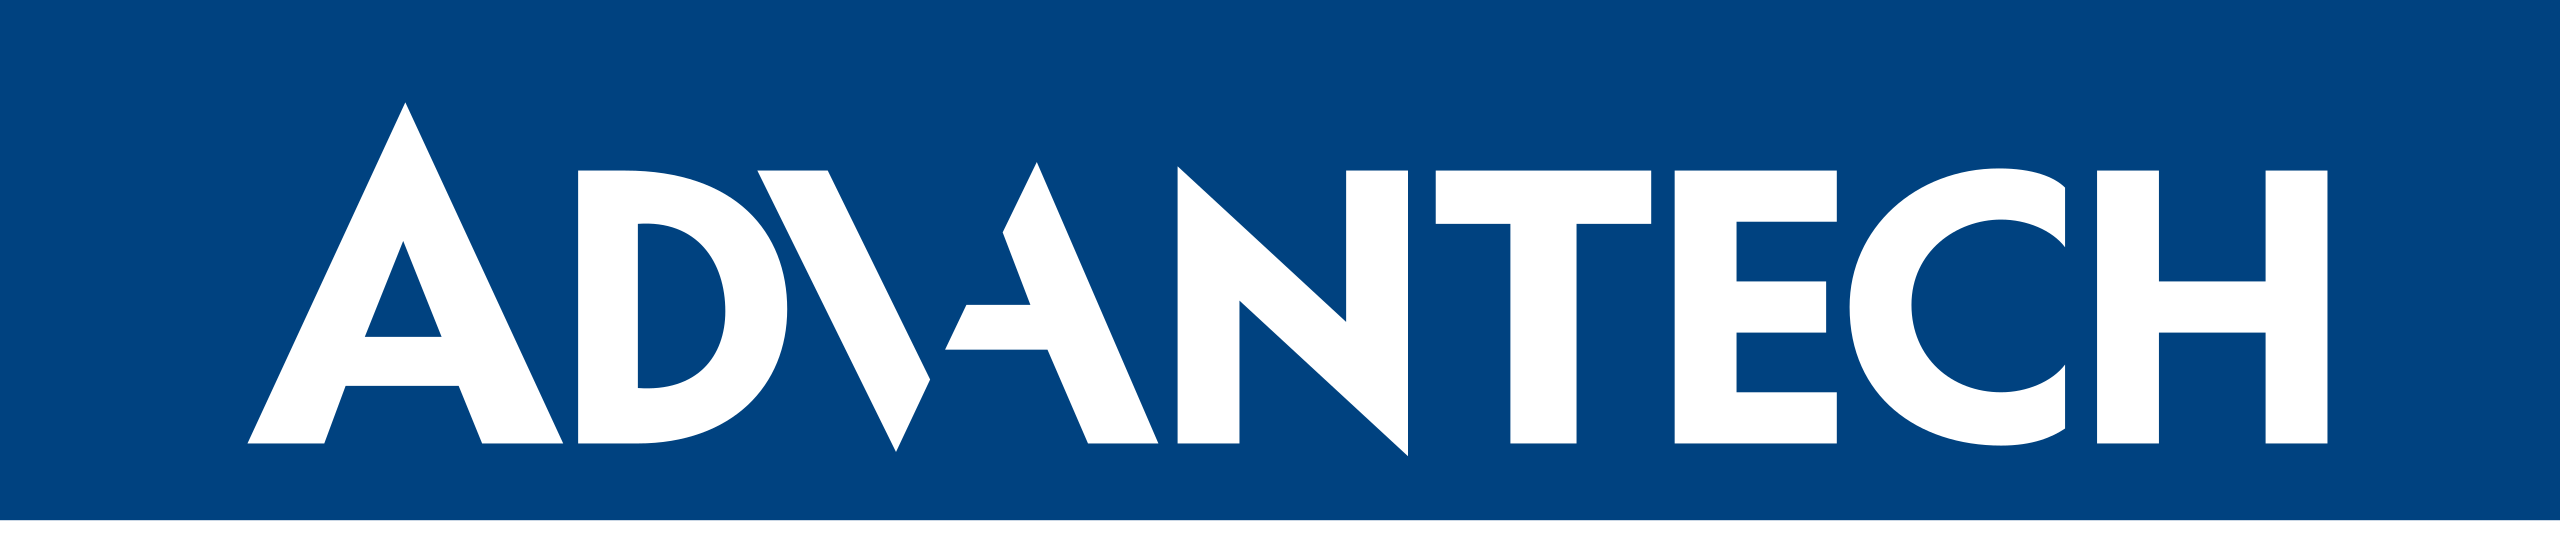 File:Advantech logo.svg - Wikimedia Commons